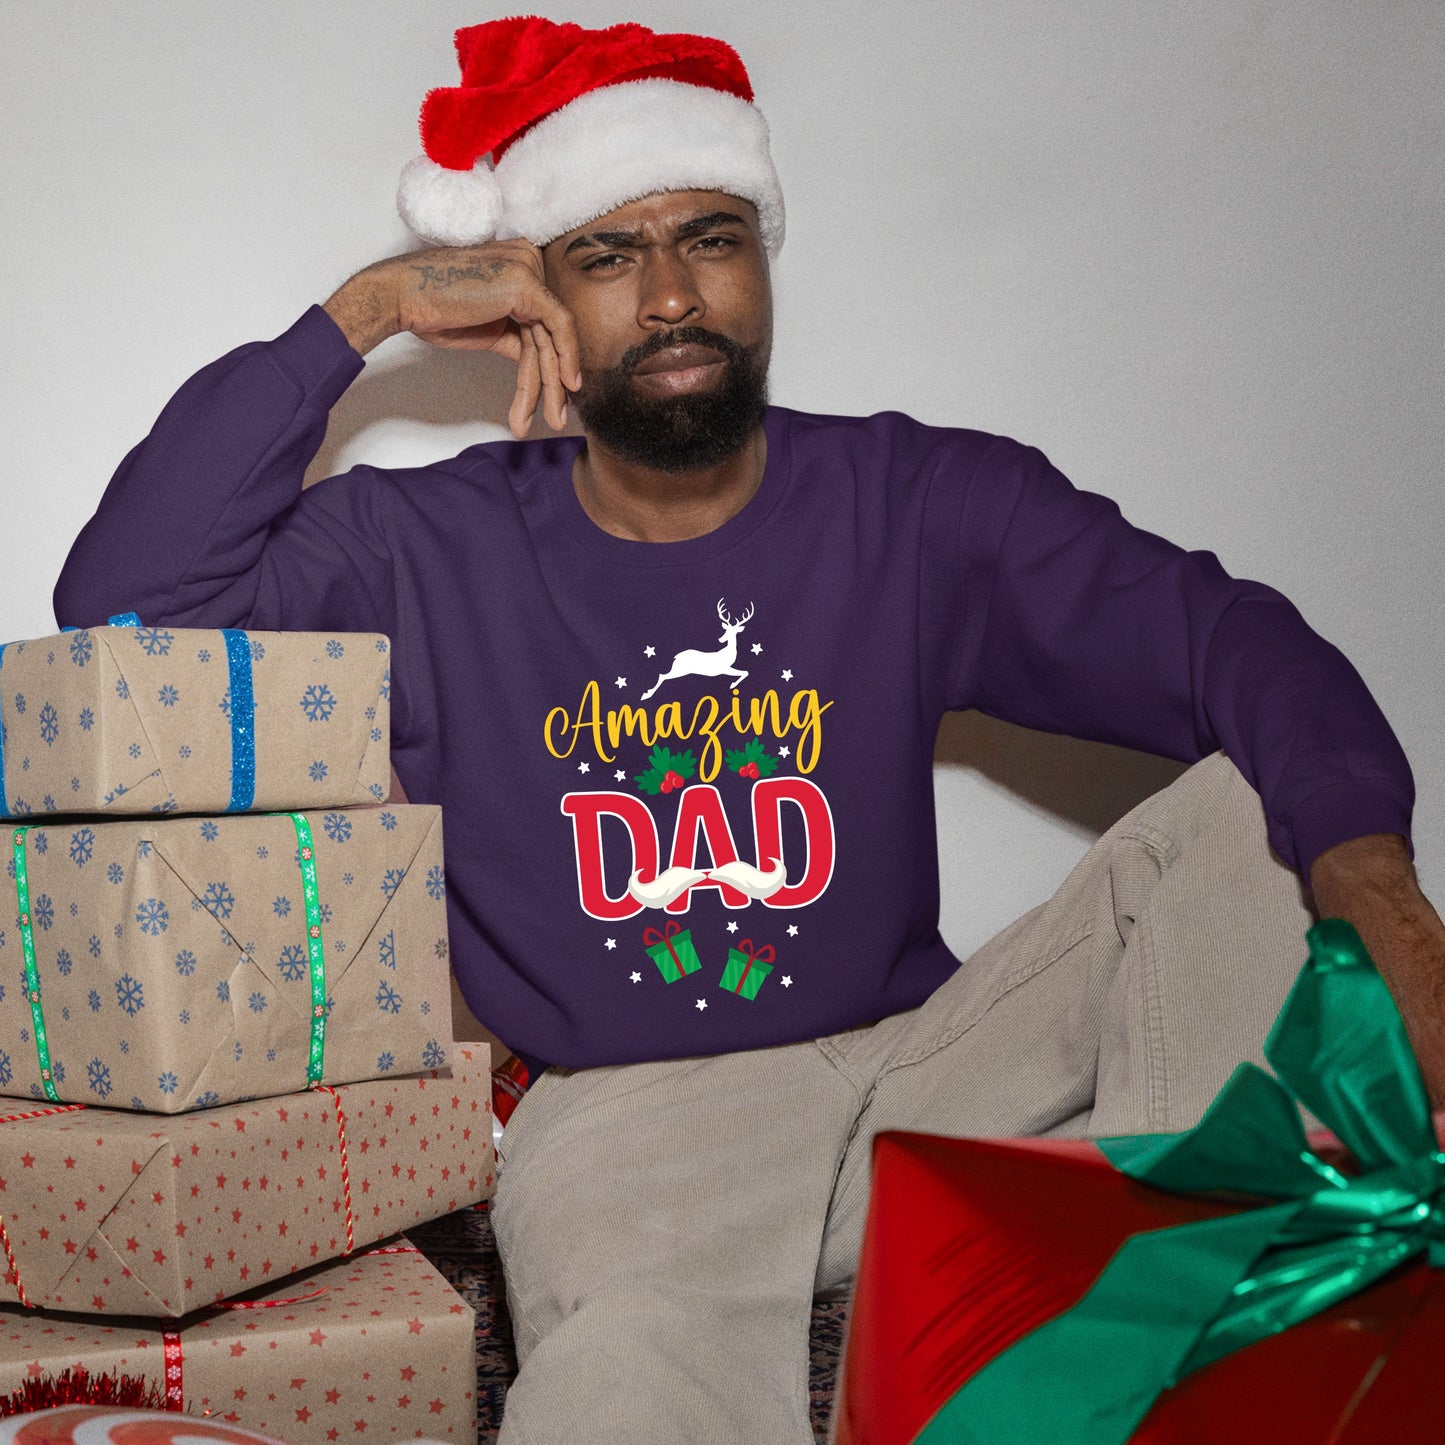 Amazing Dad, Christmas Crewneck For Men, Christmas Long Sleeves, Christmas Present, Christmas Sweater, Christmas Sweatshirt